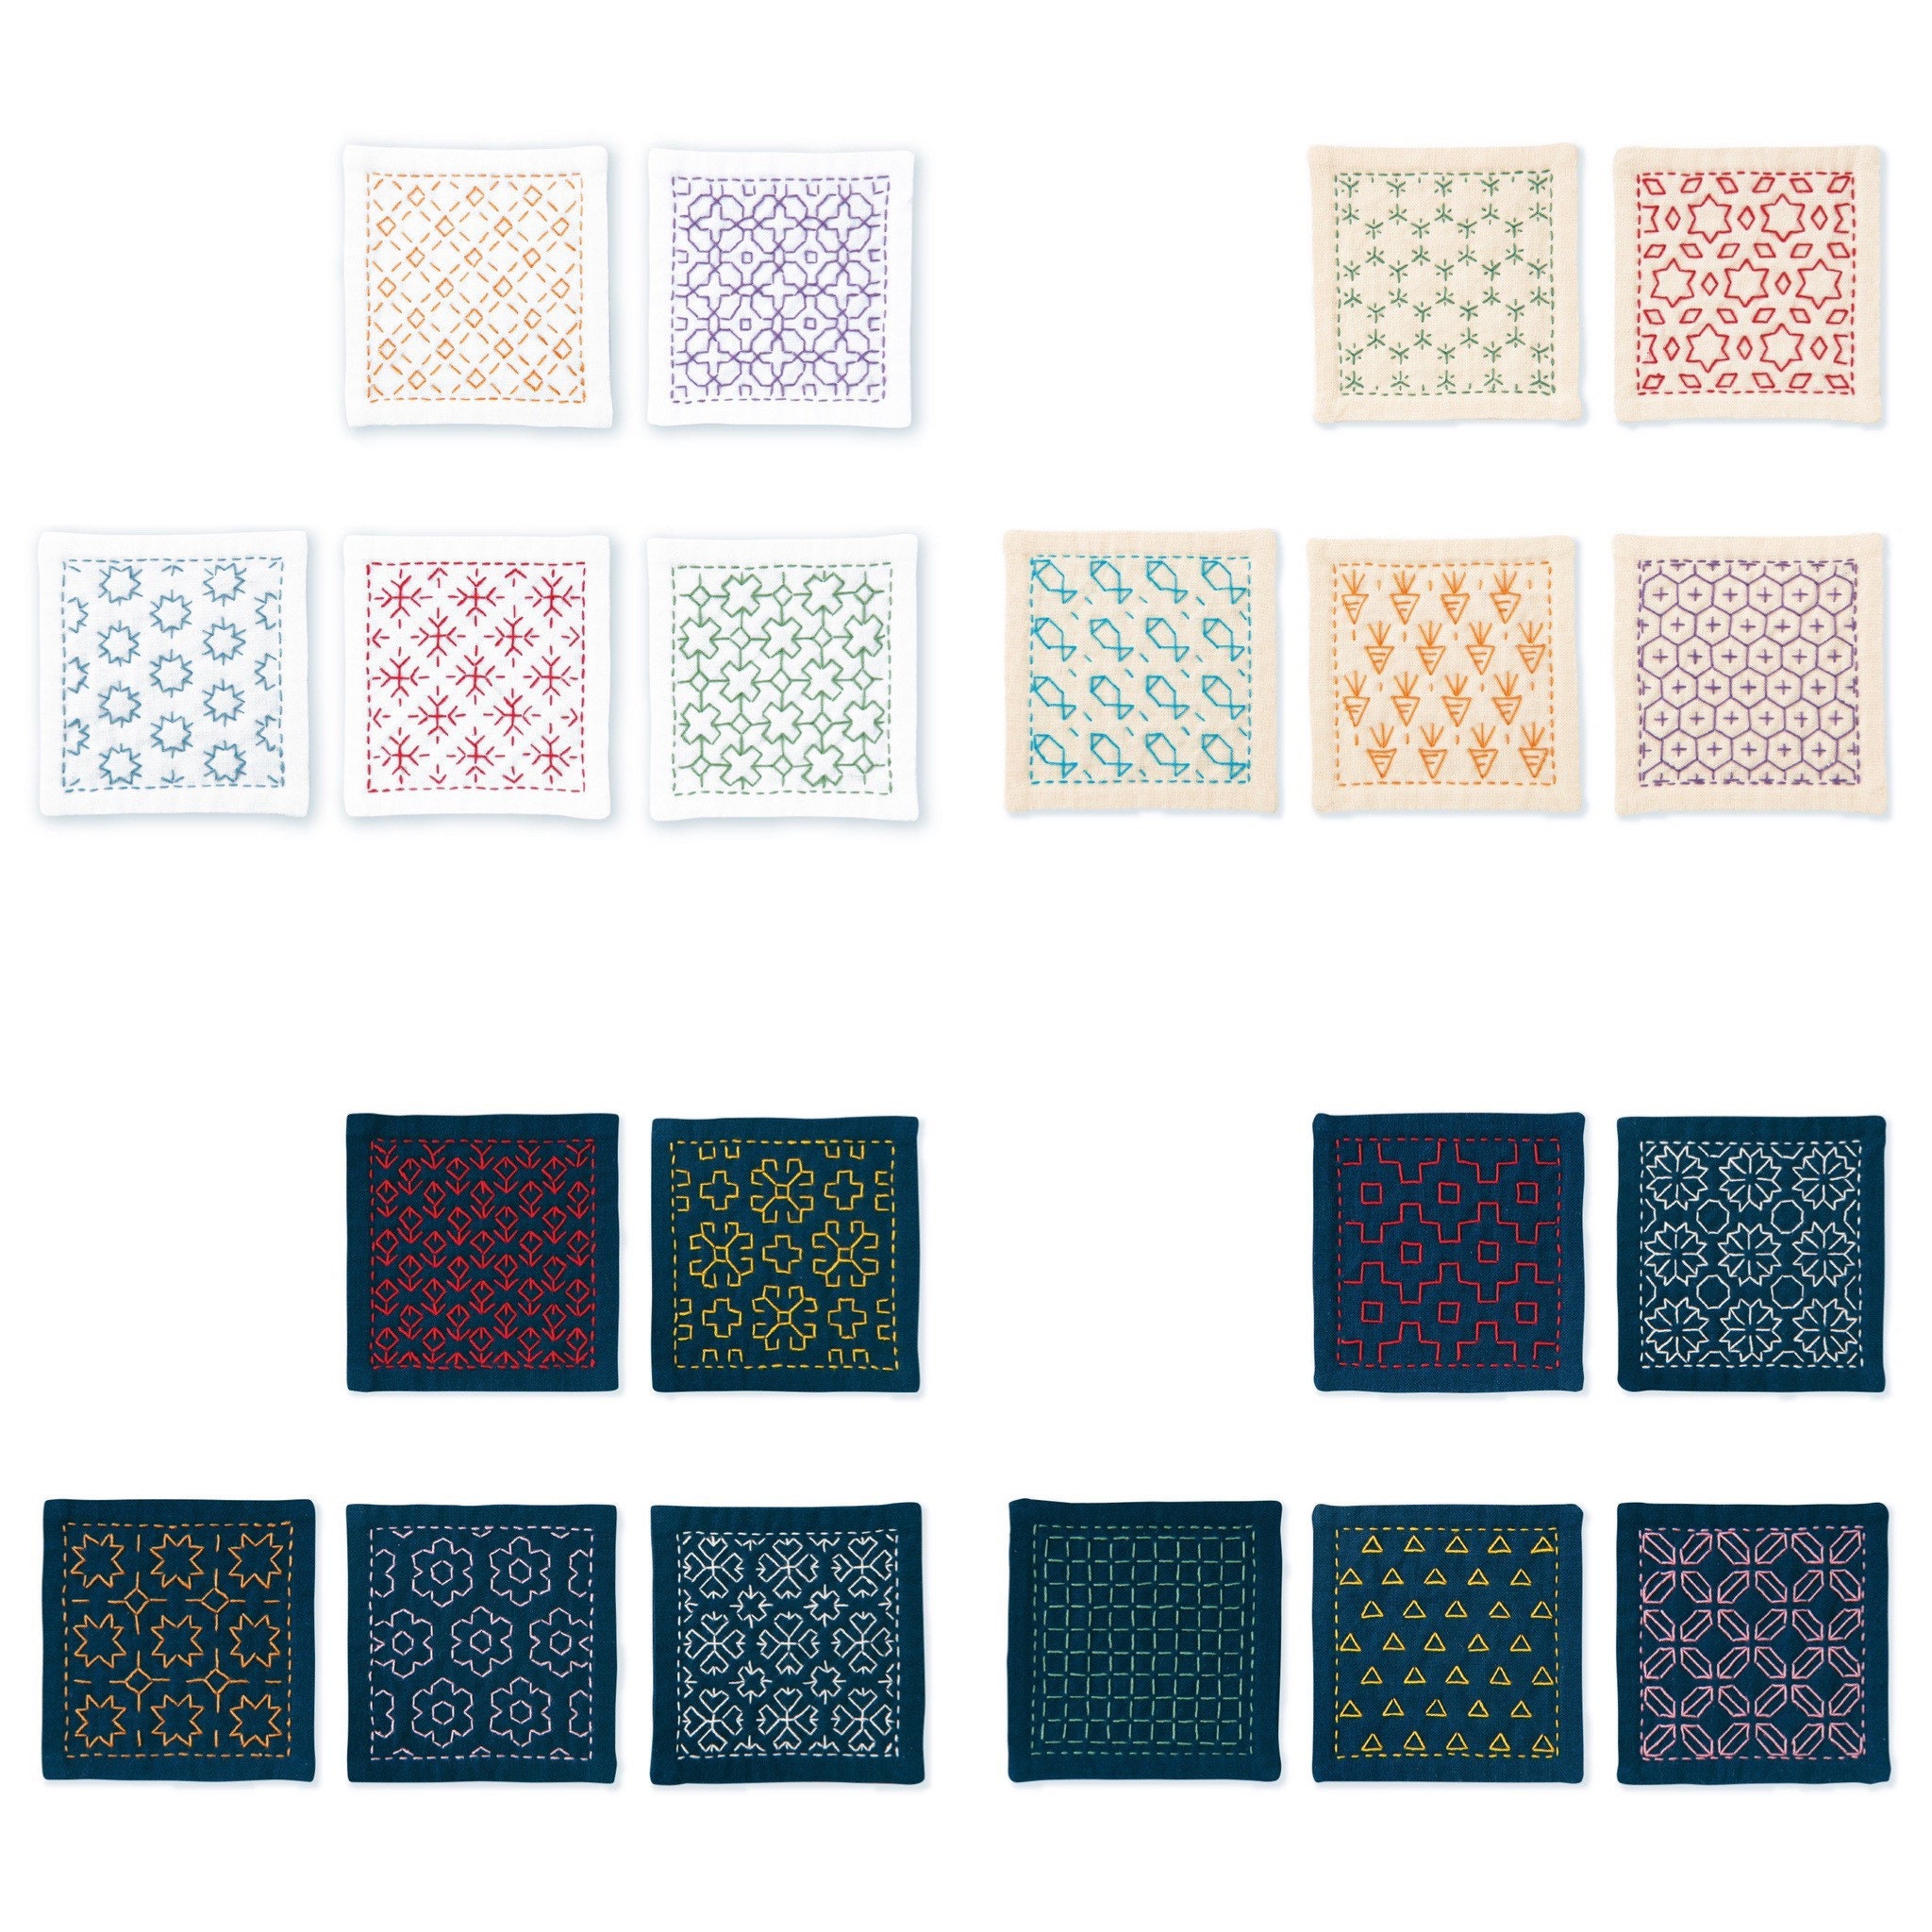 Miyamoto white cotton sarashi fabric (by the inch) - Maydel